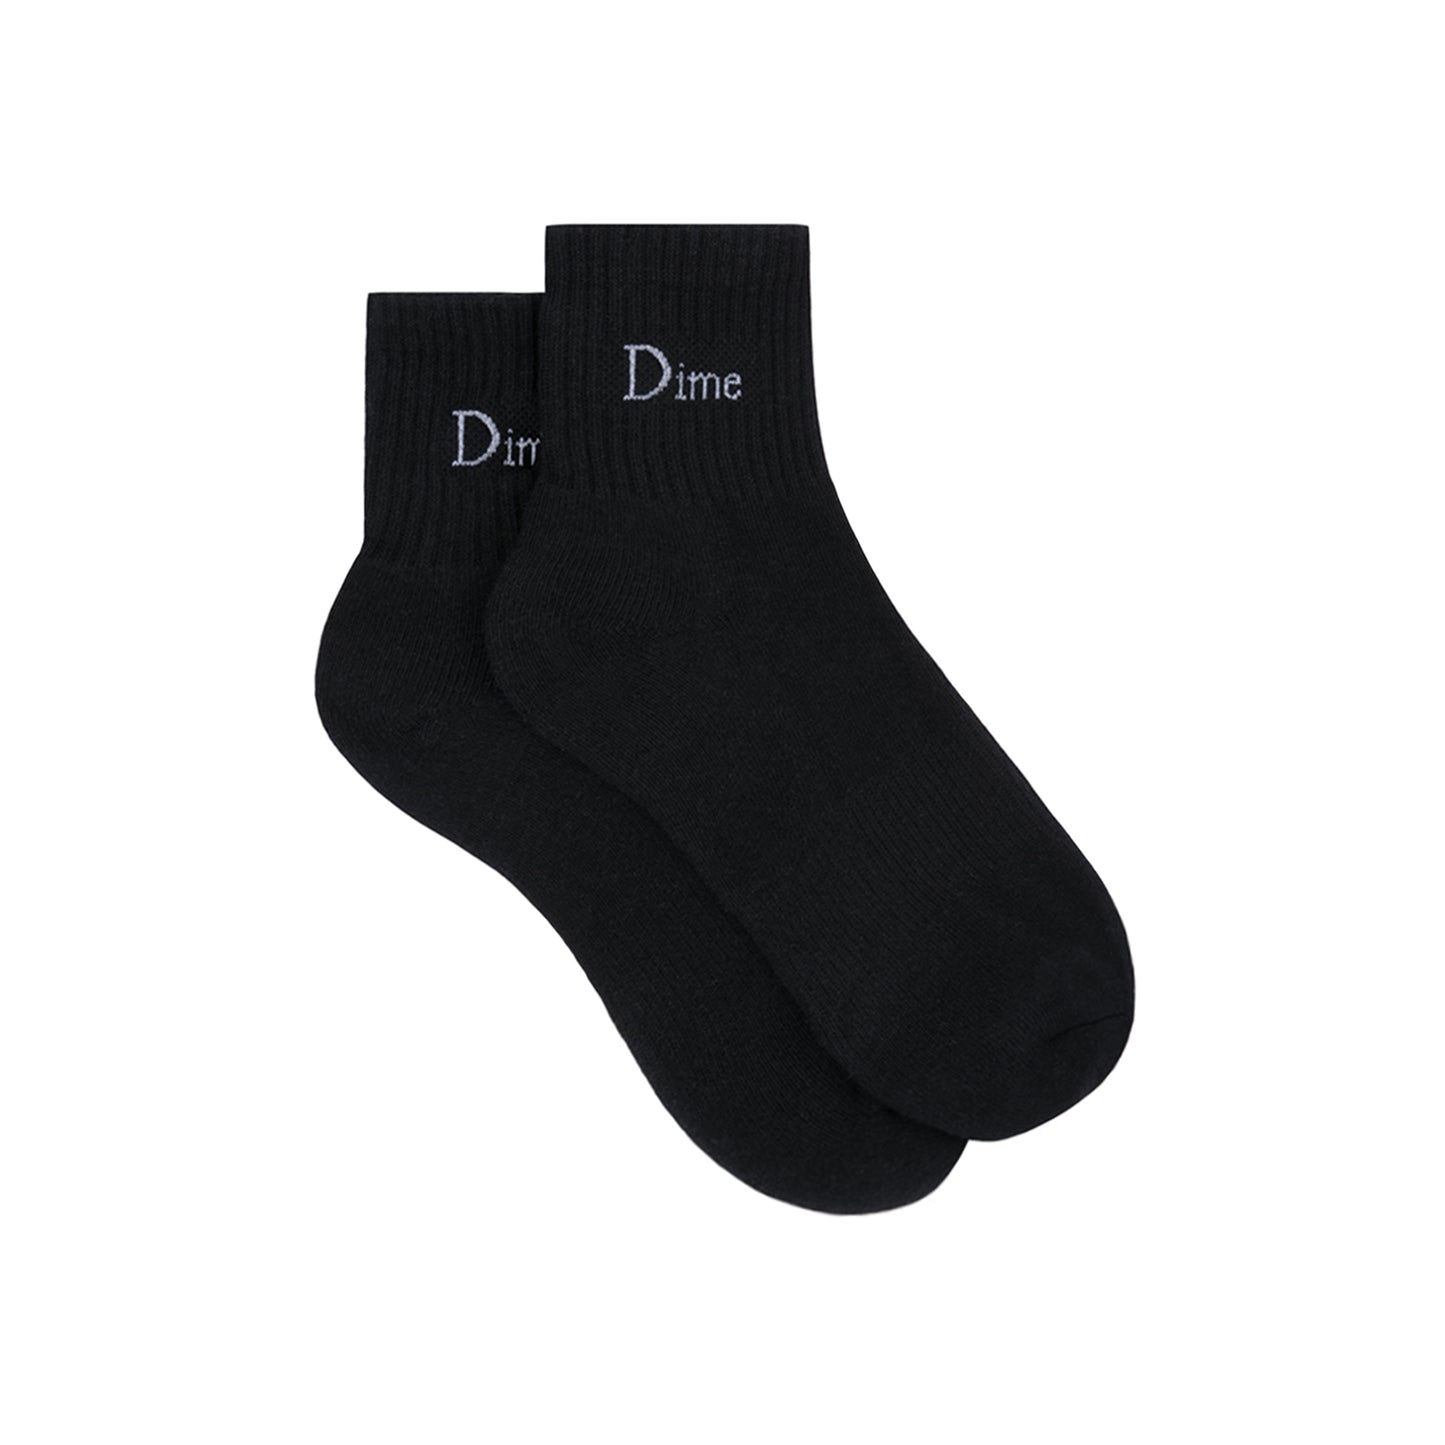 Dime Classic Socks - Assorted Colors